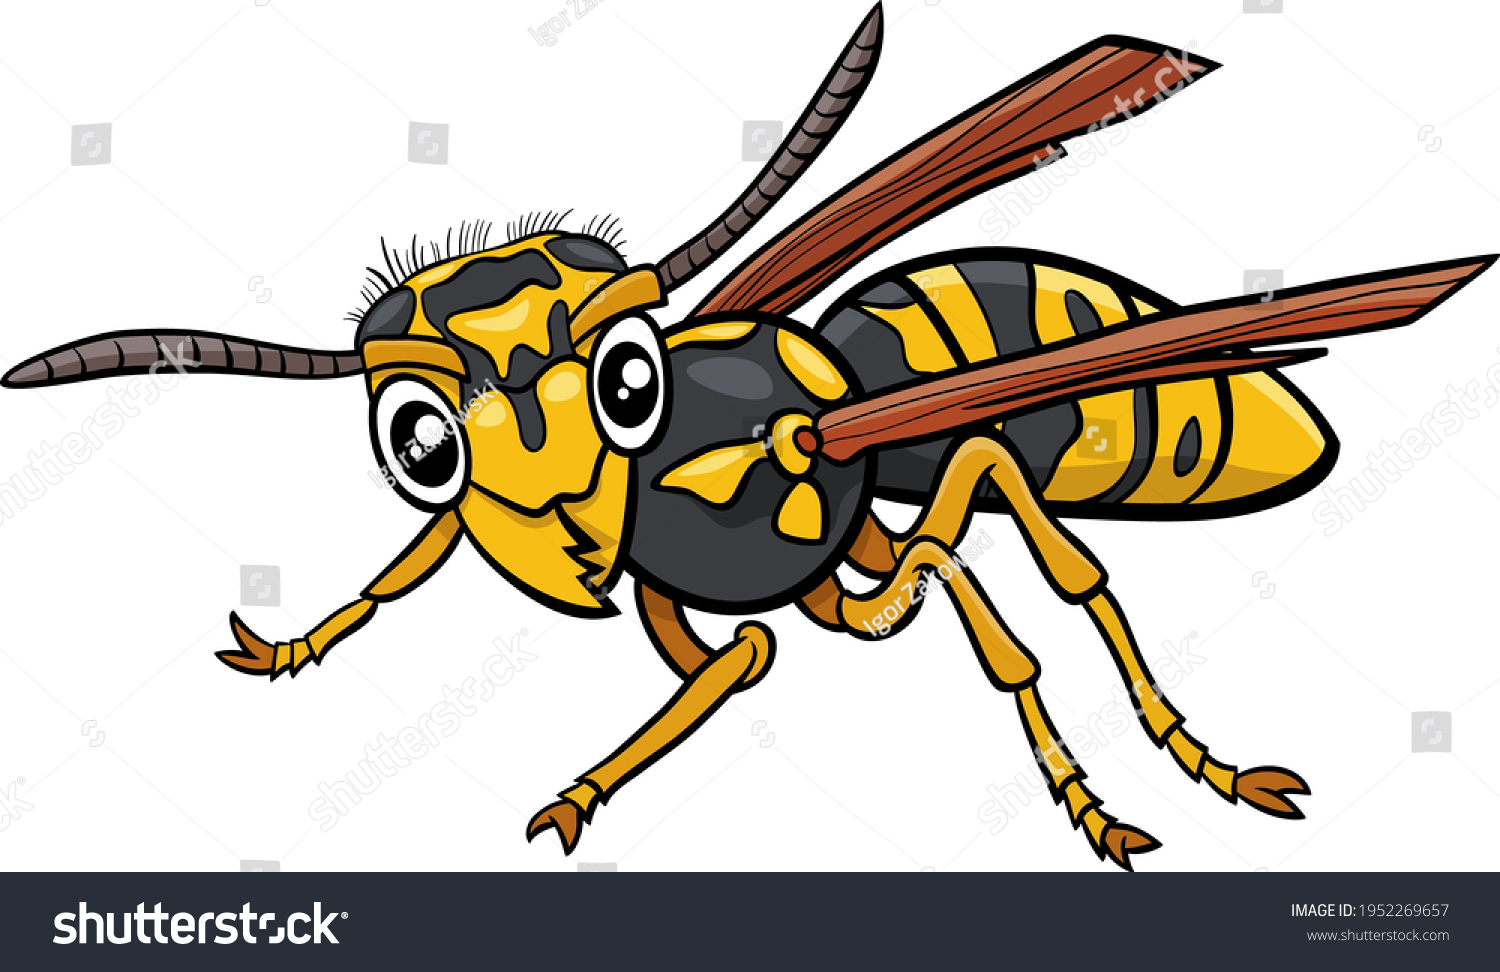 SVG of Cartoon illustration of yellowjacket or wasp insect animal character svg